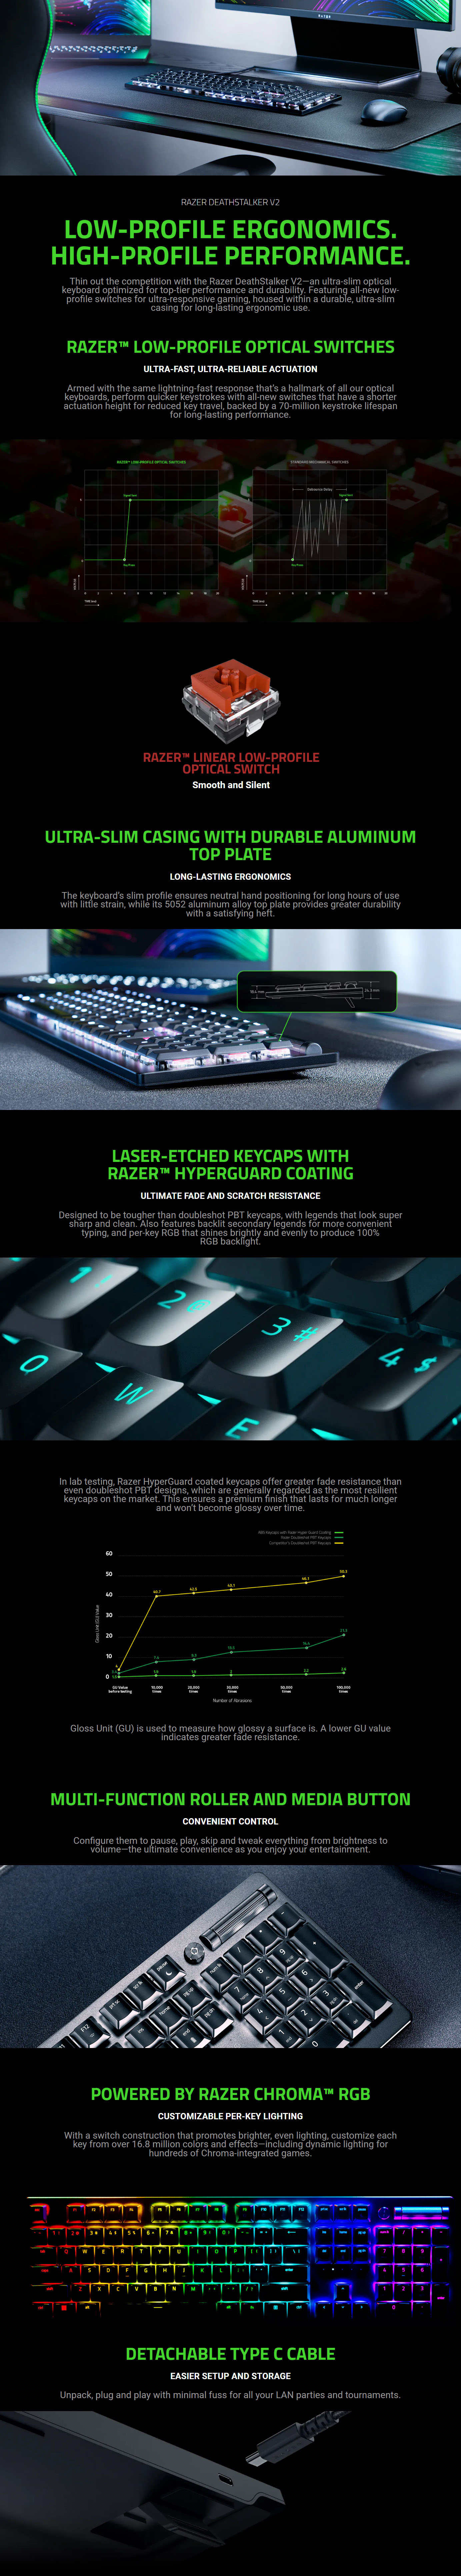 Keyboards-Razer-DeathStalker-V2-Low-Profile-RGB-Optical-Gaming-Keyboard-Linear-Optical-Red-Switch-1